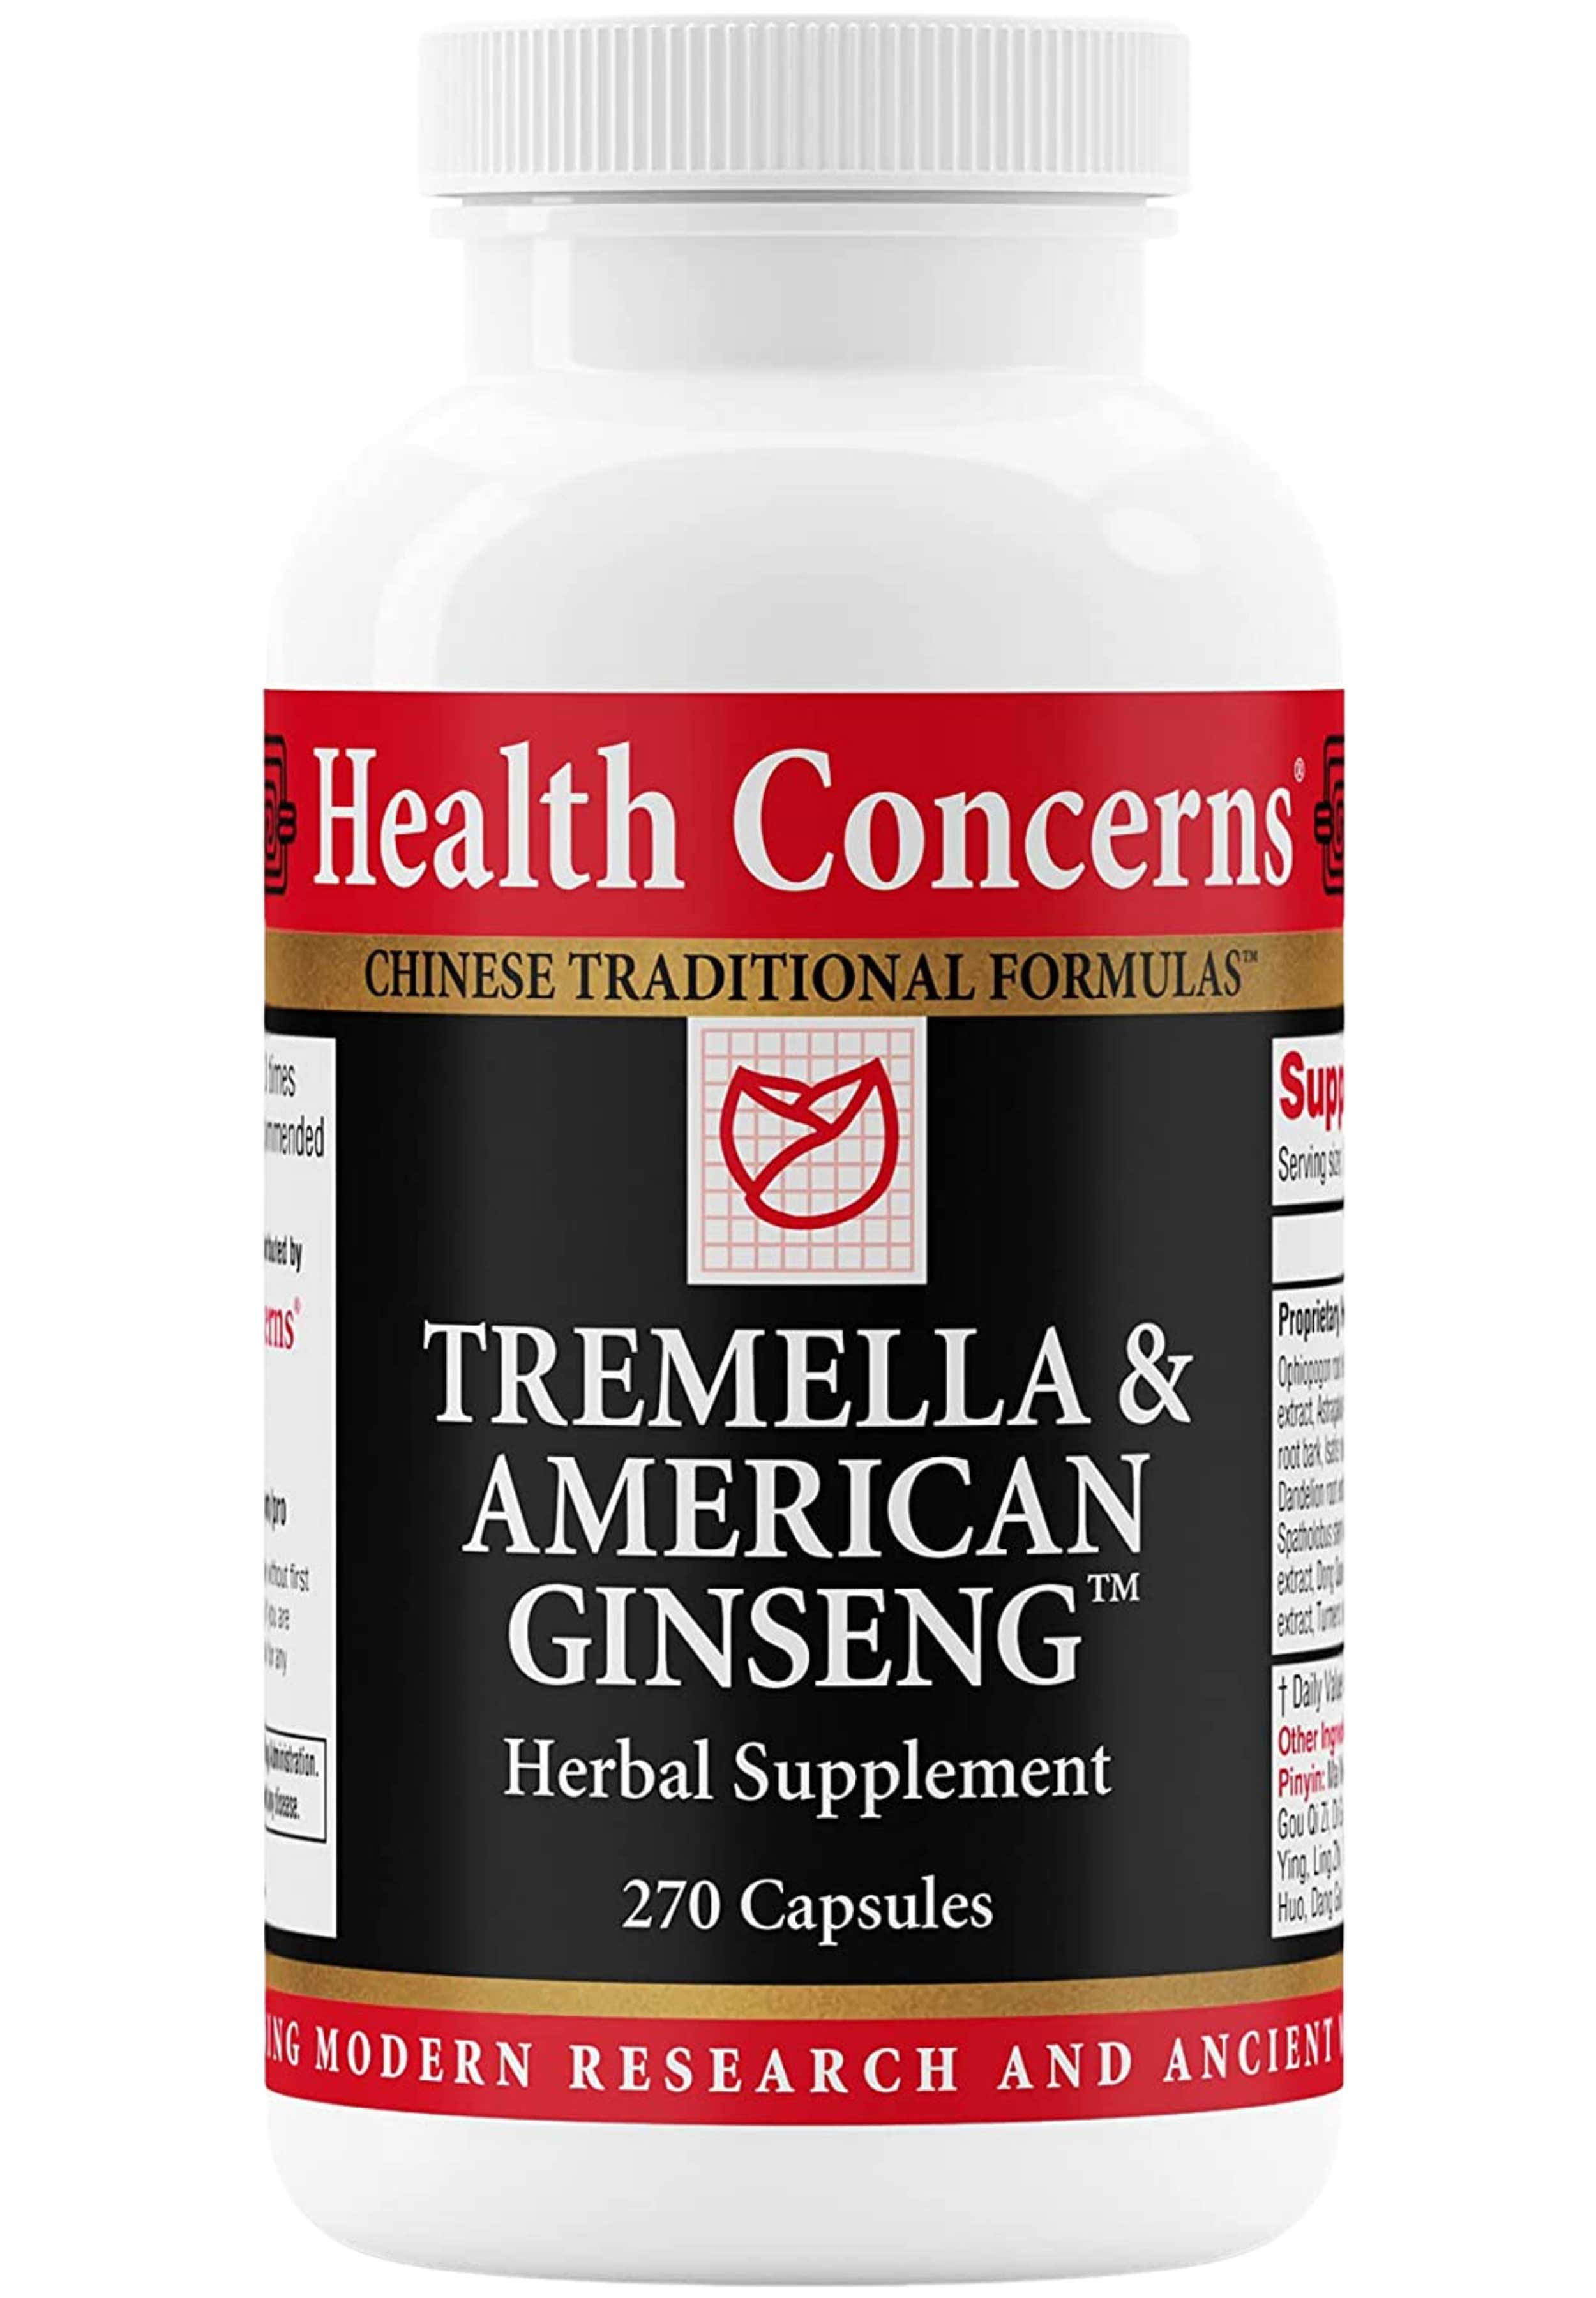 Health Concerns Tremella & American Ginseng